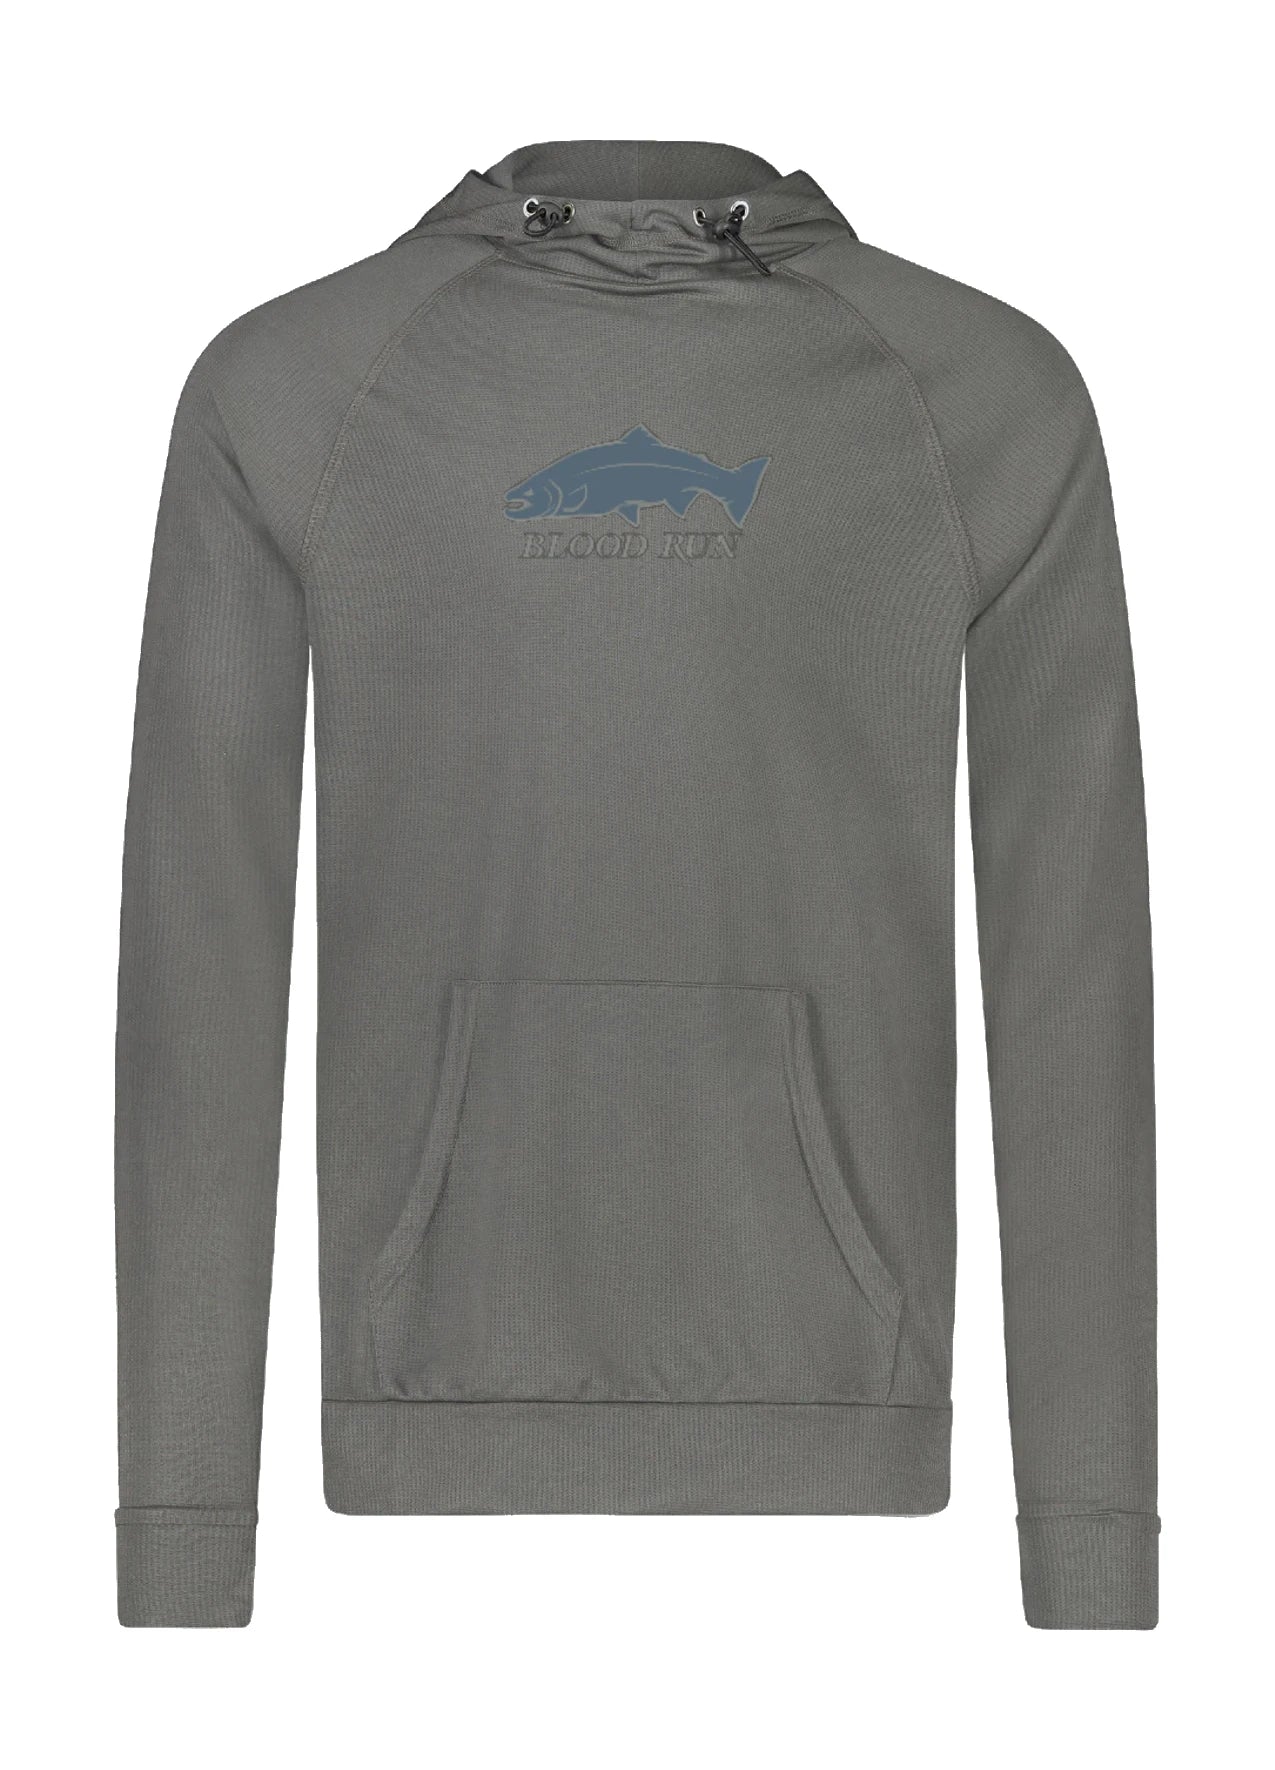 Steel Gray SPF 50 Performance Fishing Shirt from Blood Run Fishing